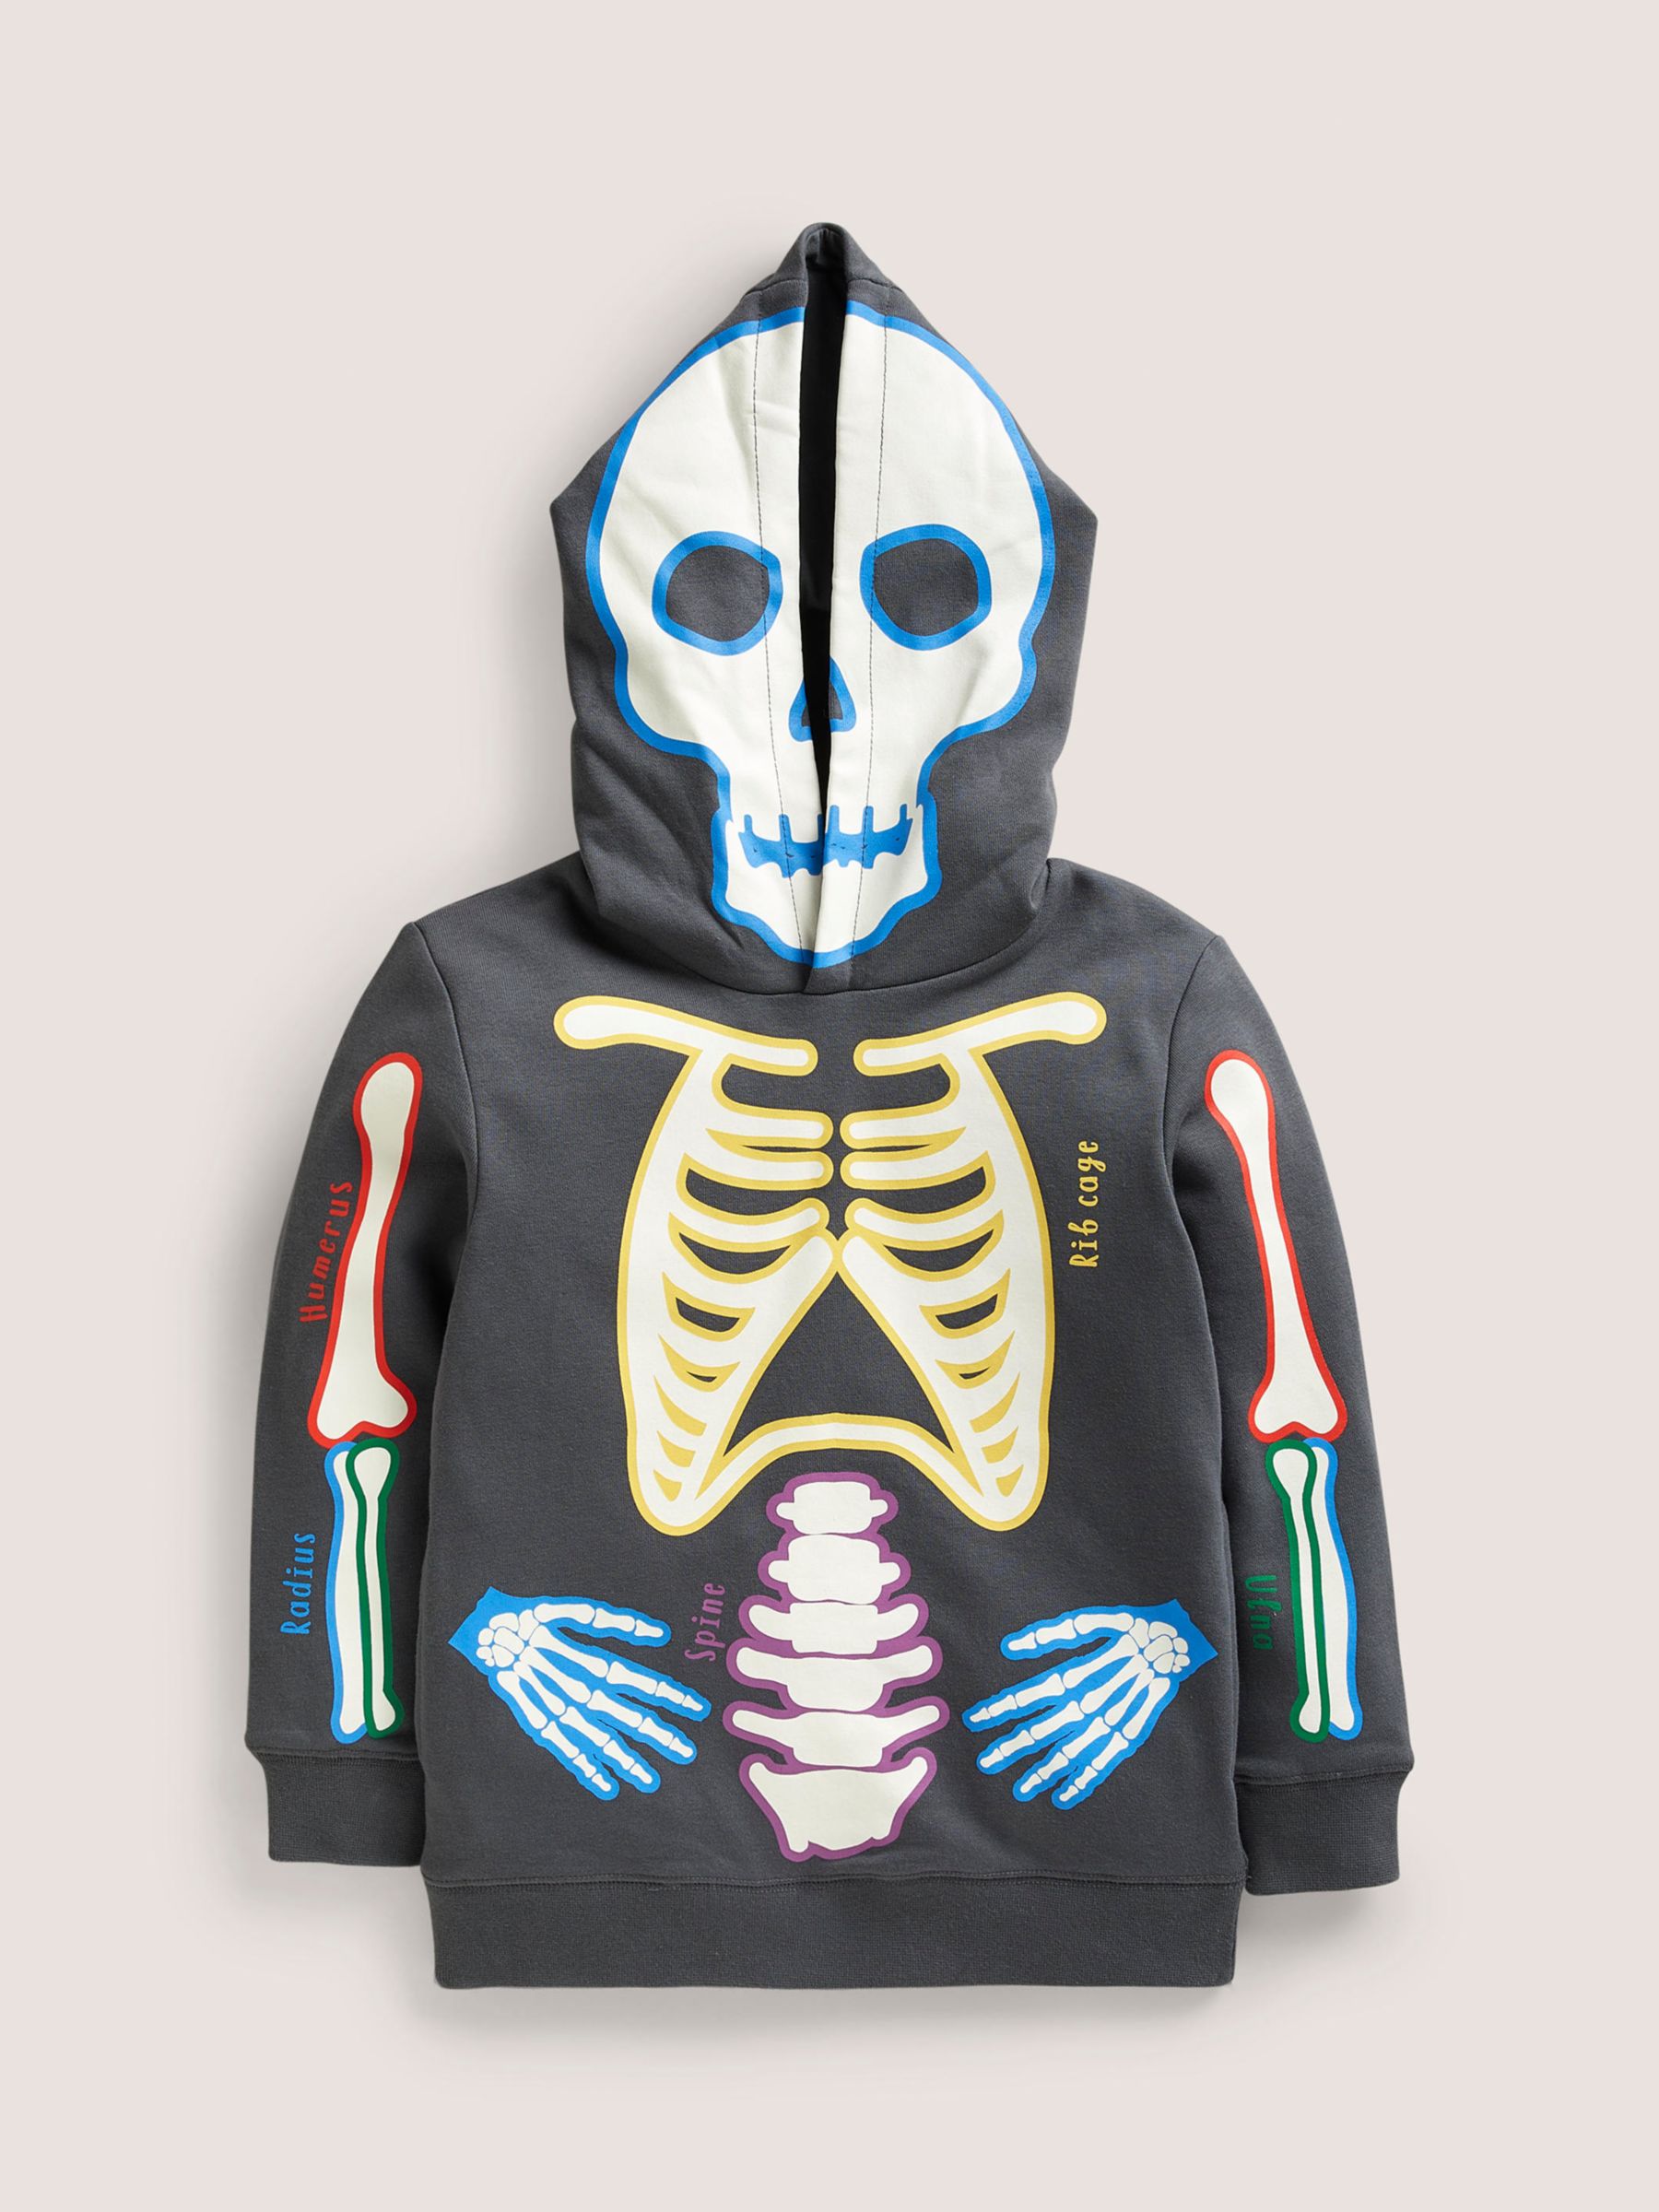 Kid Boy/Kid Girl Halloween Skeleton Graphic Print Pullover Sweatshirt